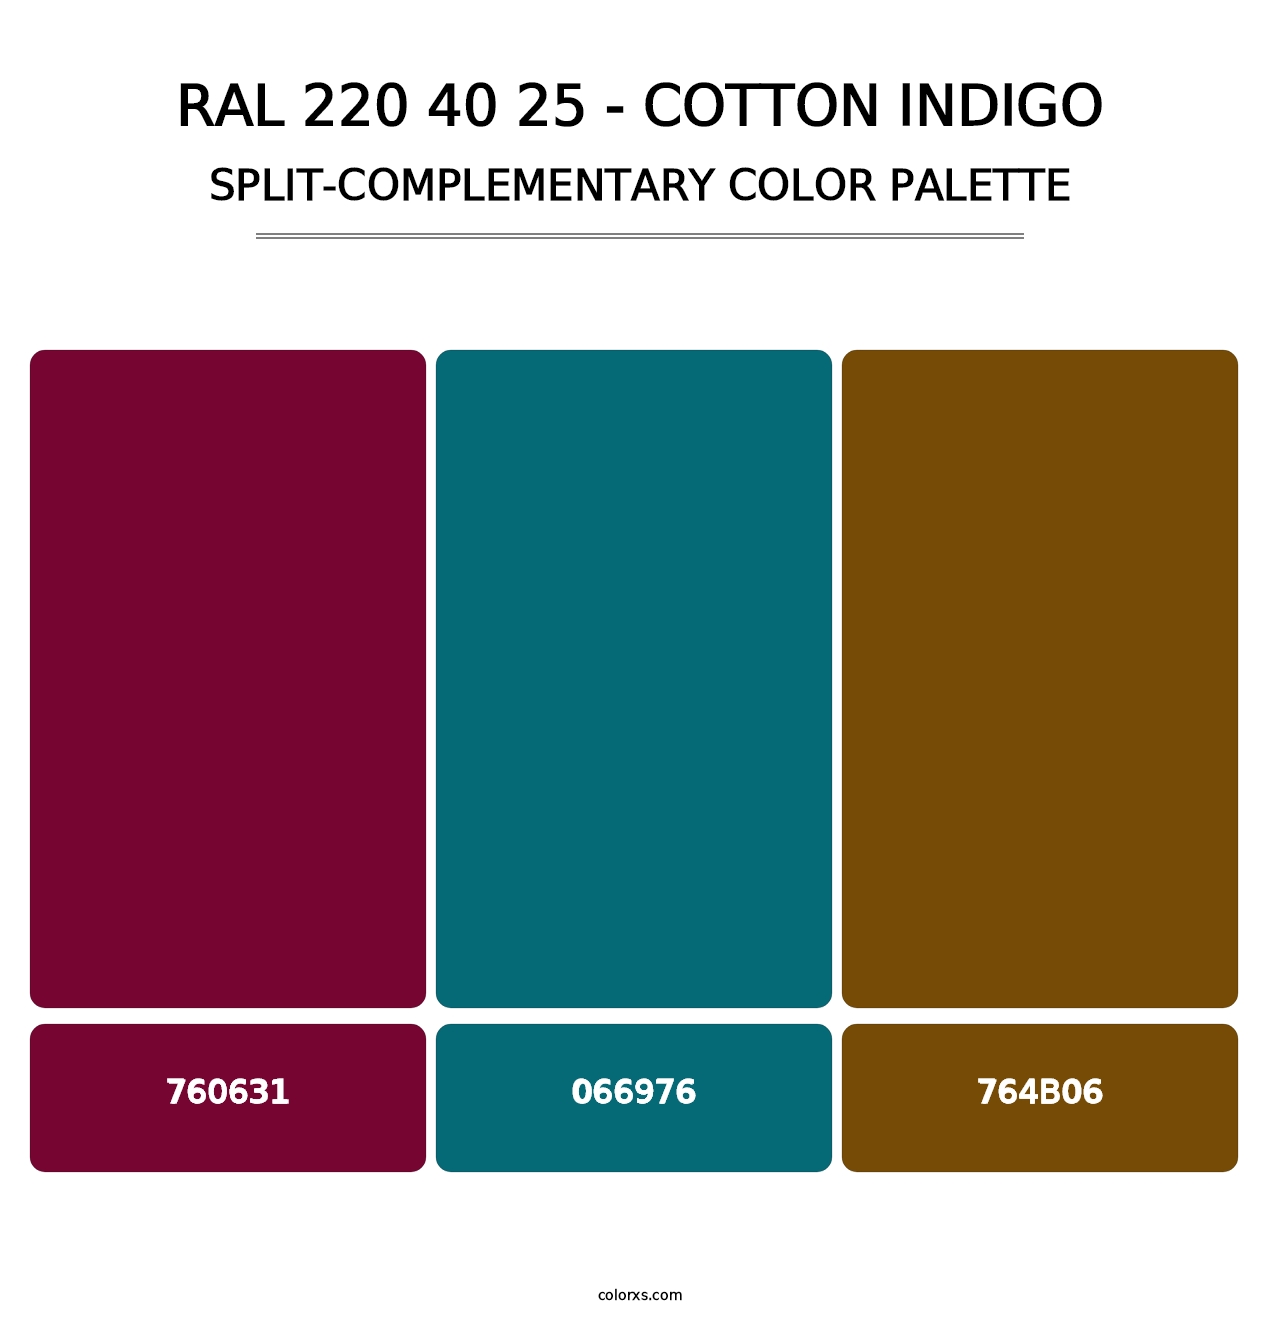 RAL 220 40 25 - Cotton Indigo - Split-Complementary Color Palette